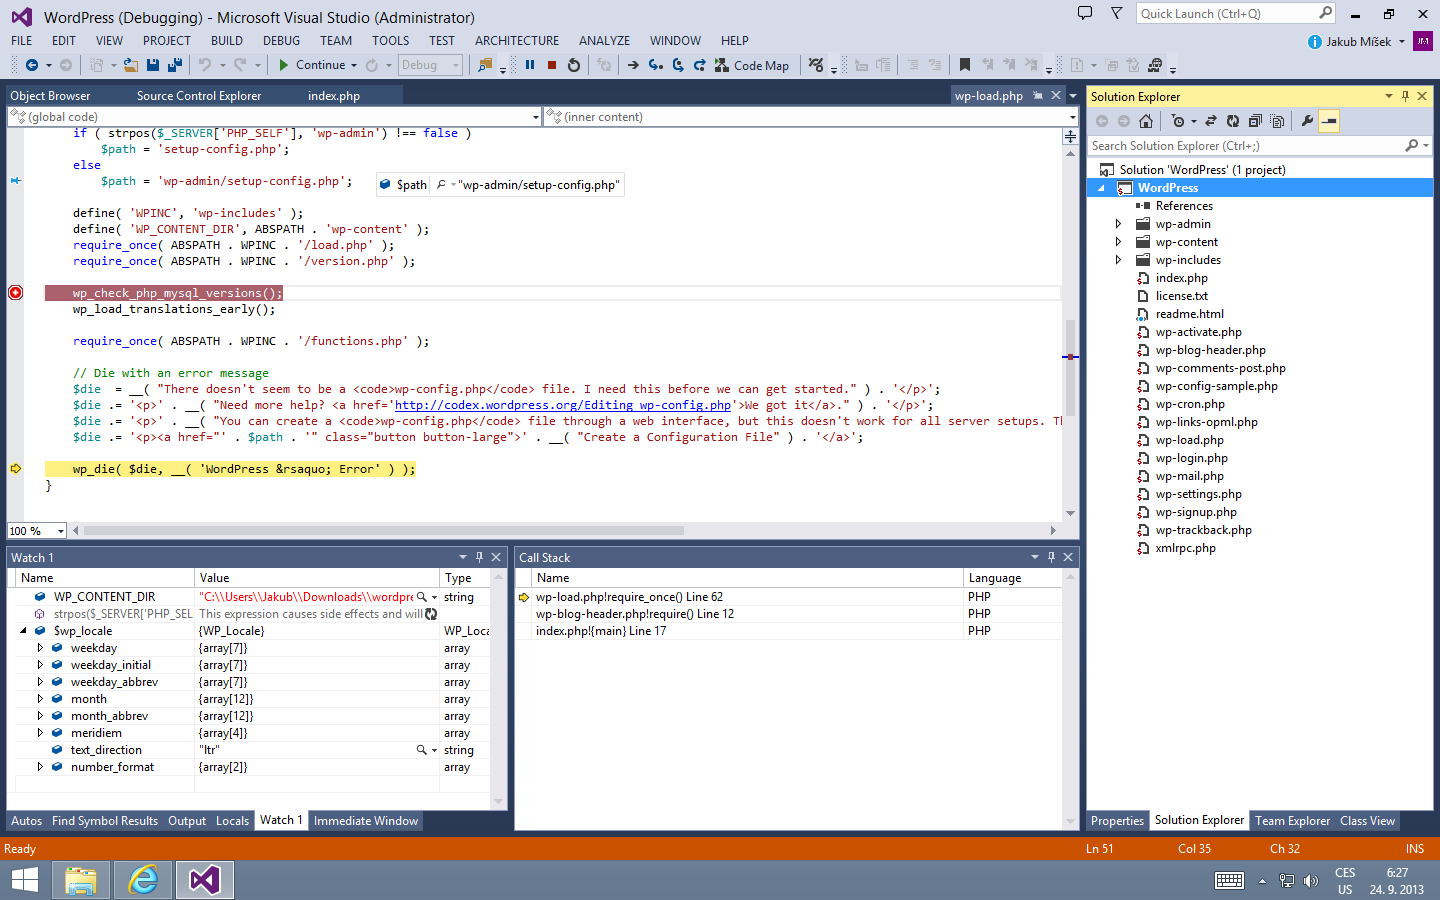 Microsoft Visual Studio php